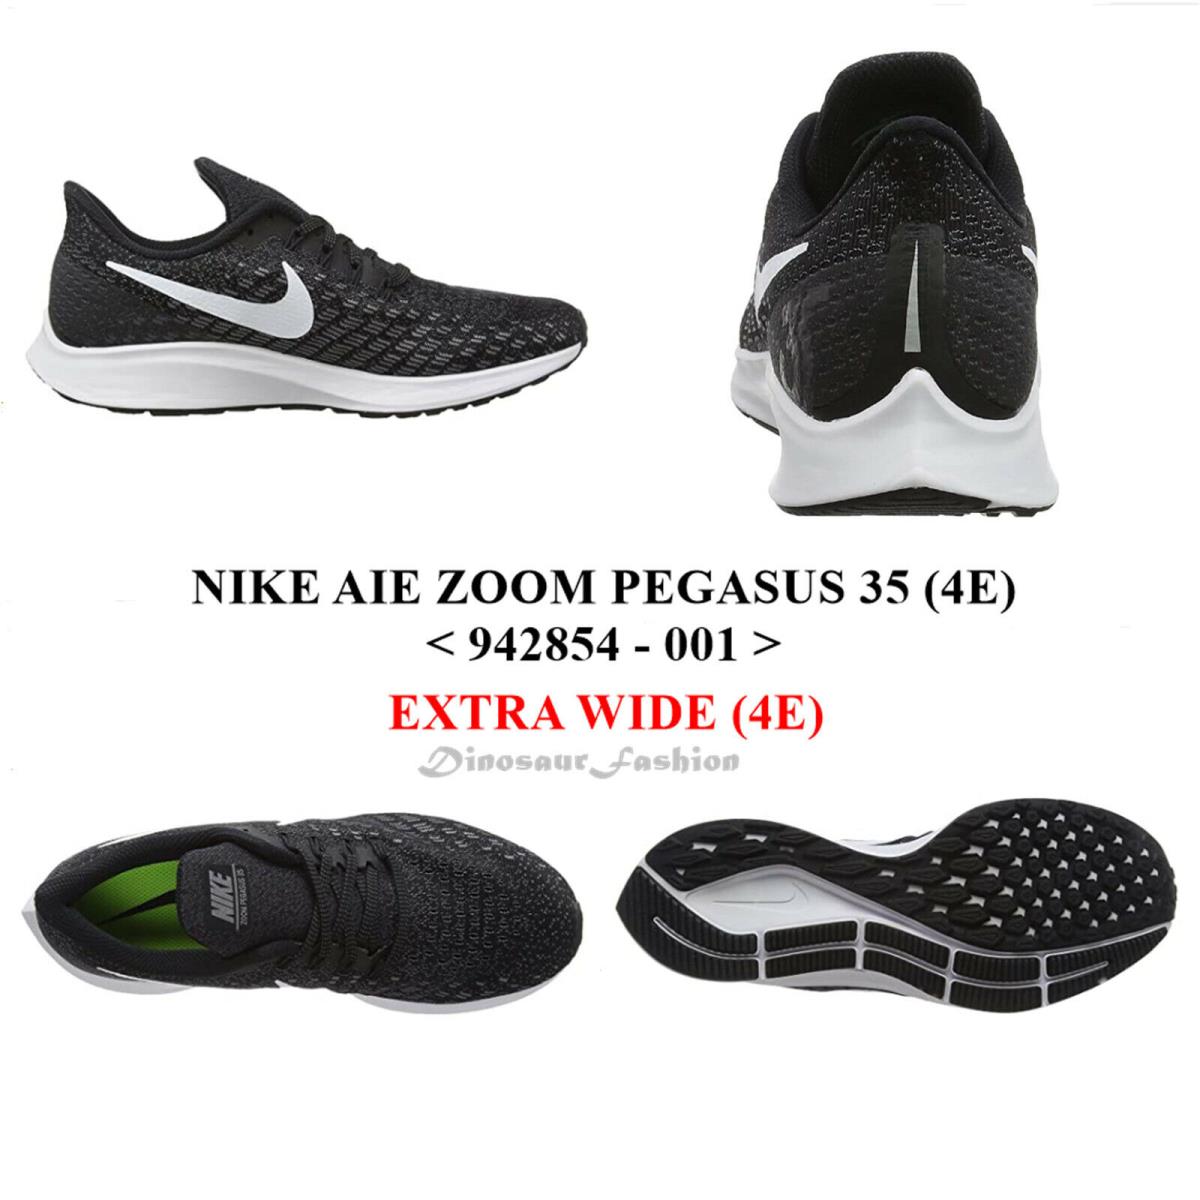 Nike Air Zoom Pegasus 35 4E 942854 - 001 .men`s Running Shoes .